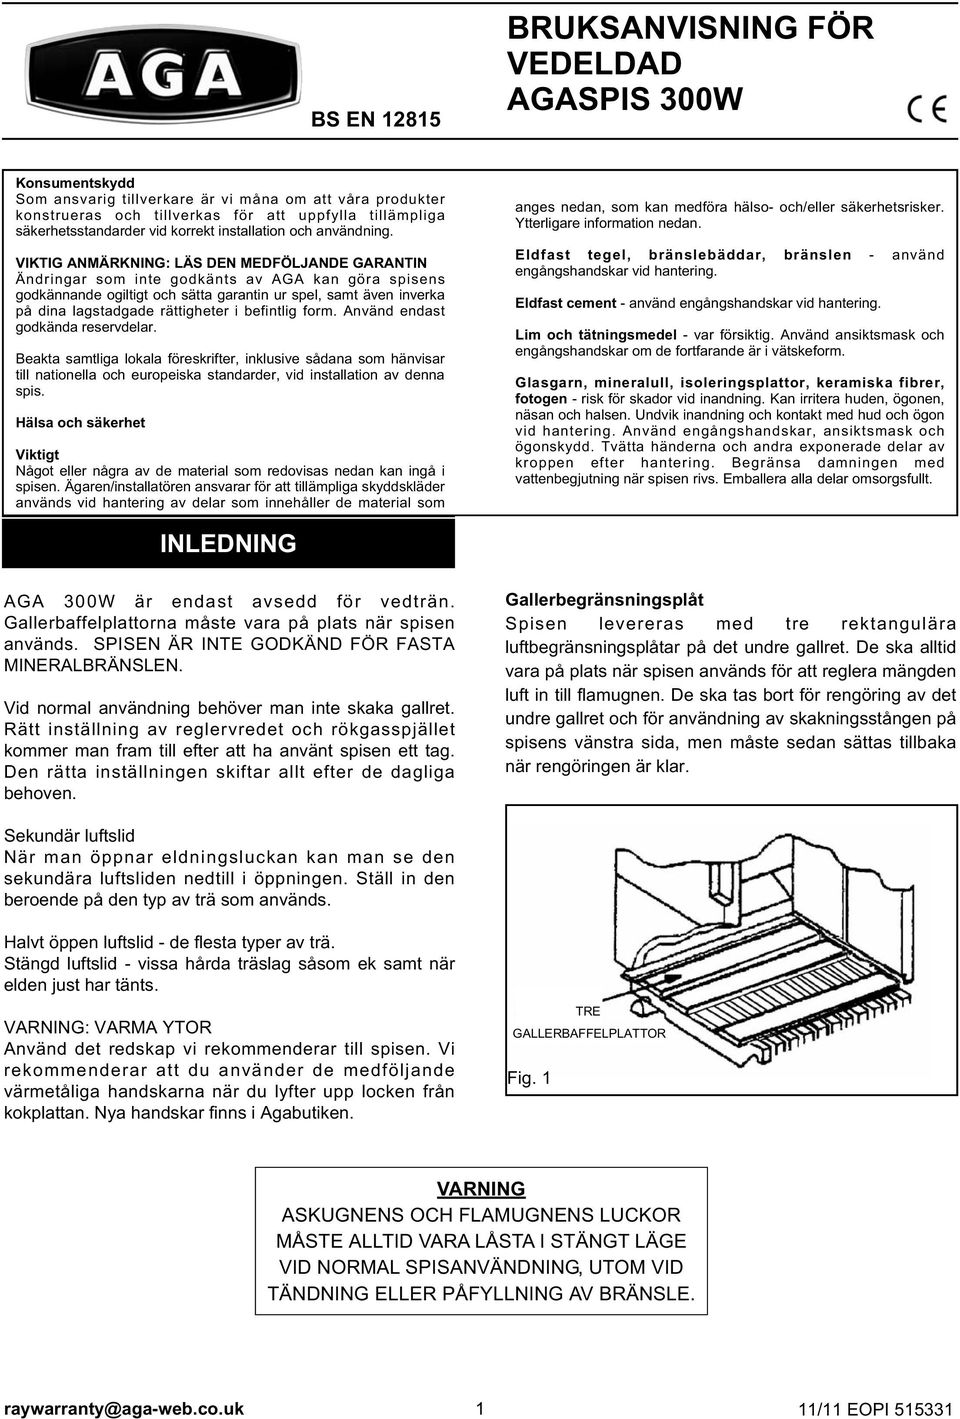 BRUKSANVISNING FÖR VEDELDAD AGASPIS 300W - PDF Free Download